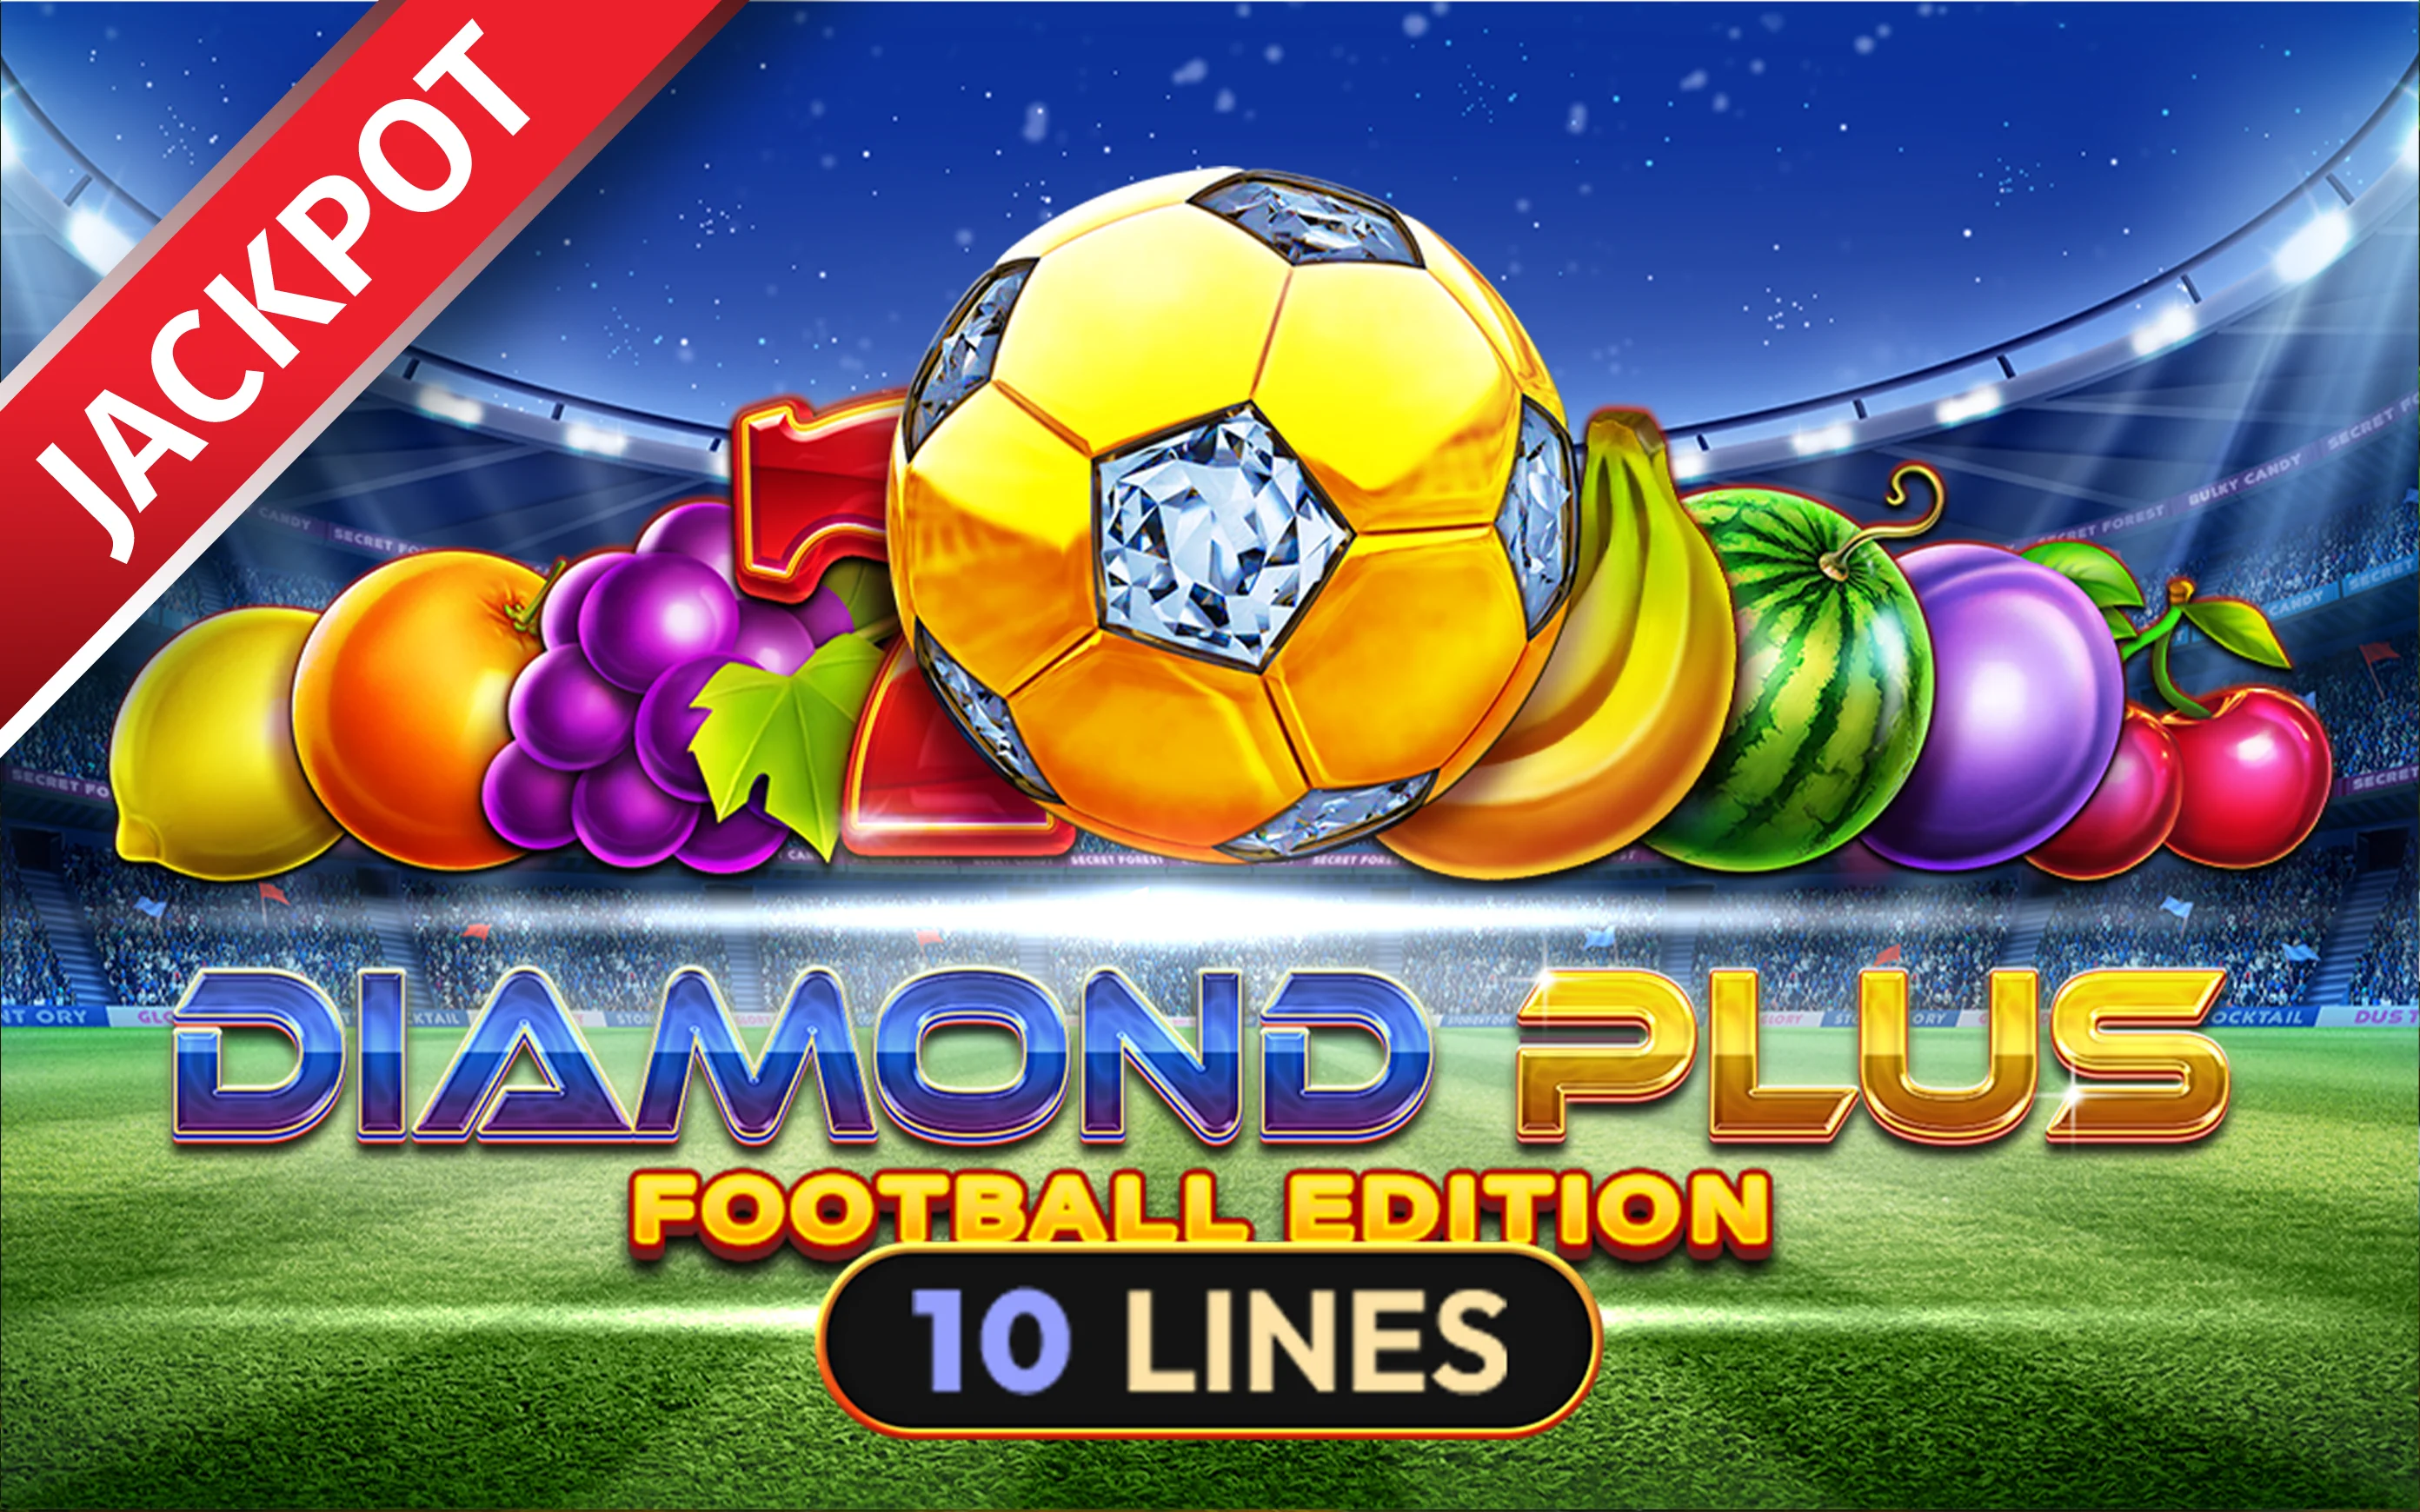 Jogue Diamond Plus Football Edition no casino online Starcasino.be 